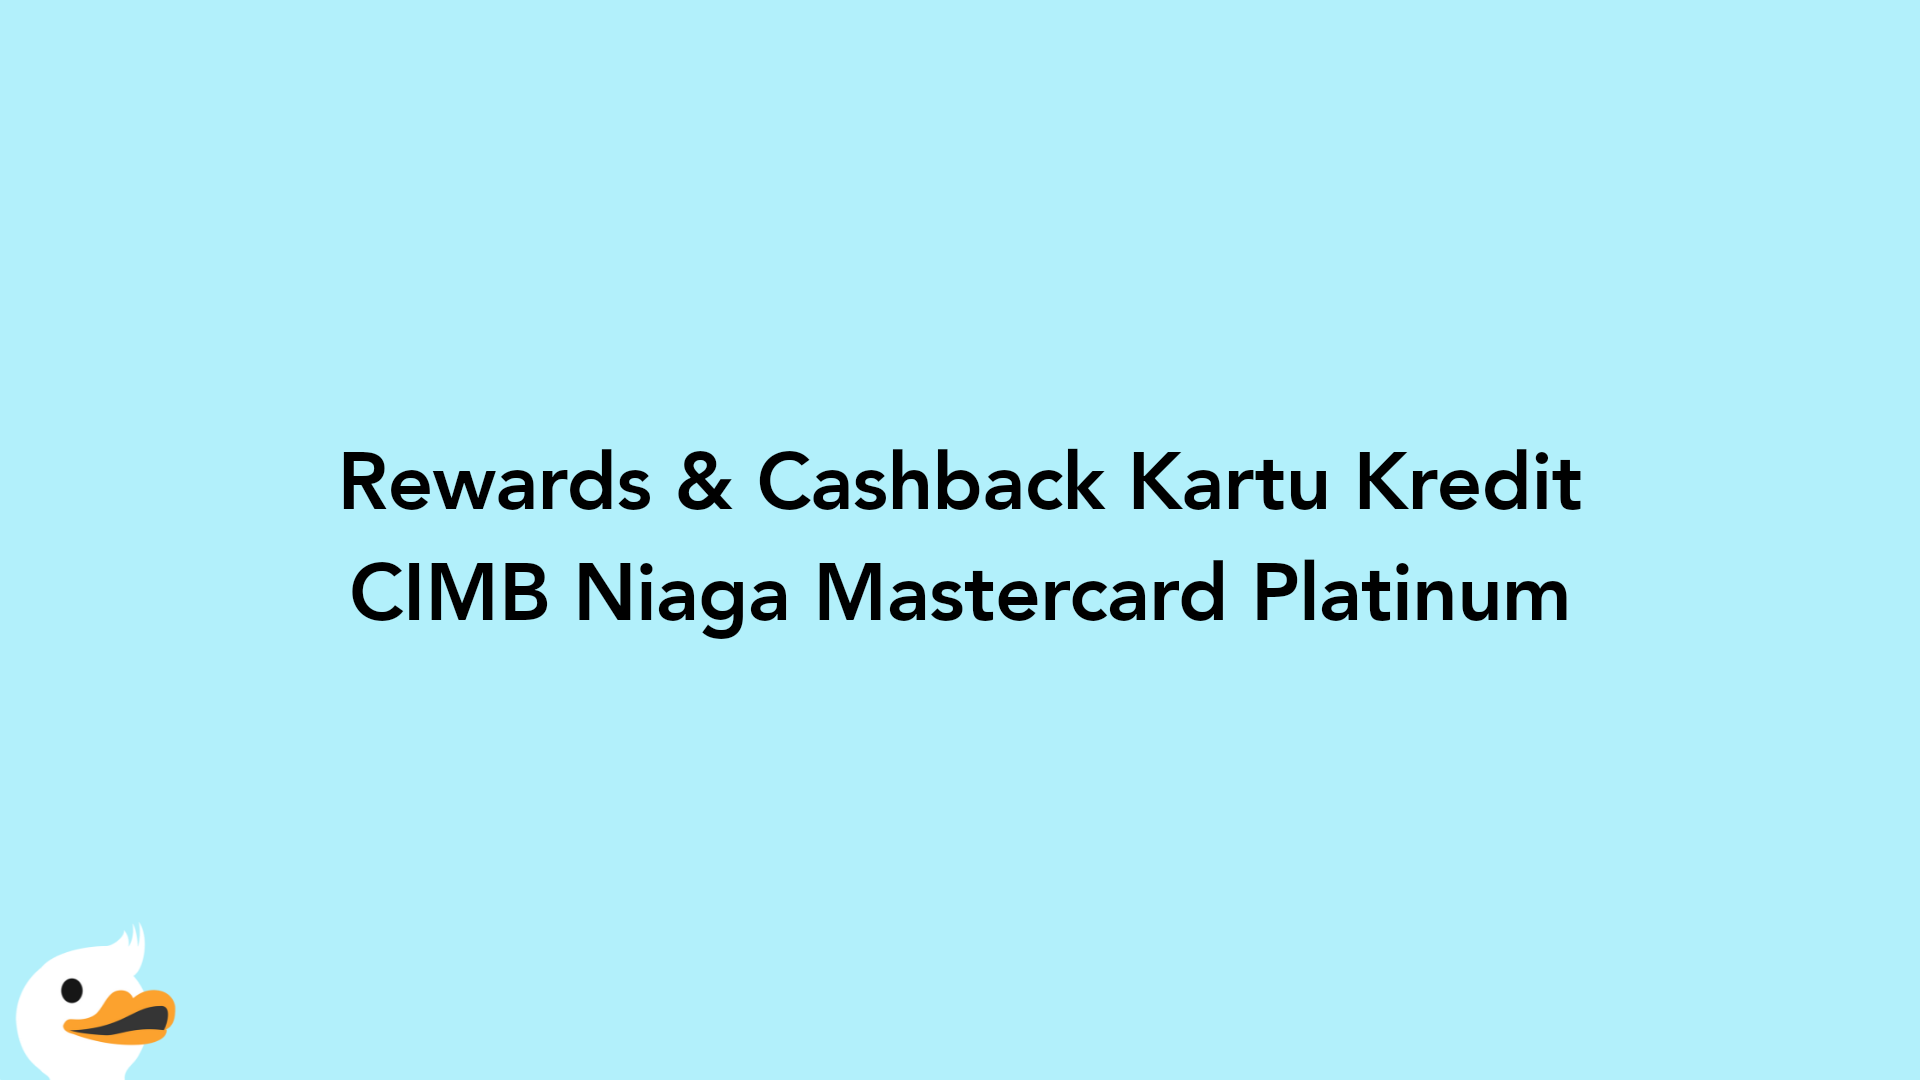 Rewards & Cashback Kartu Kredit CIMB Niaga Mastercard Platinum